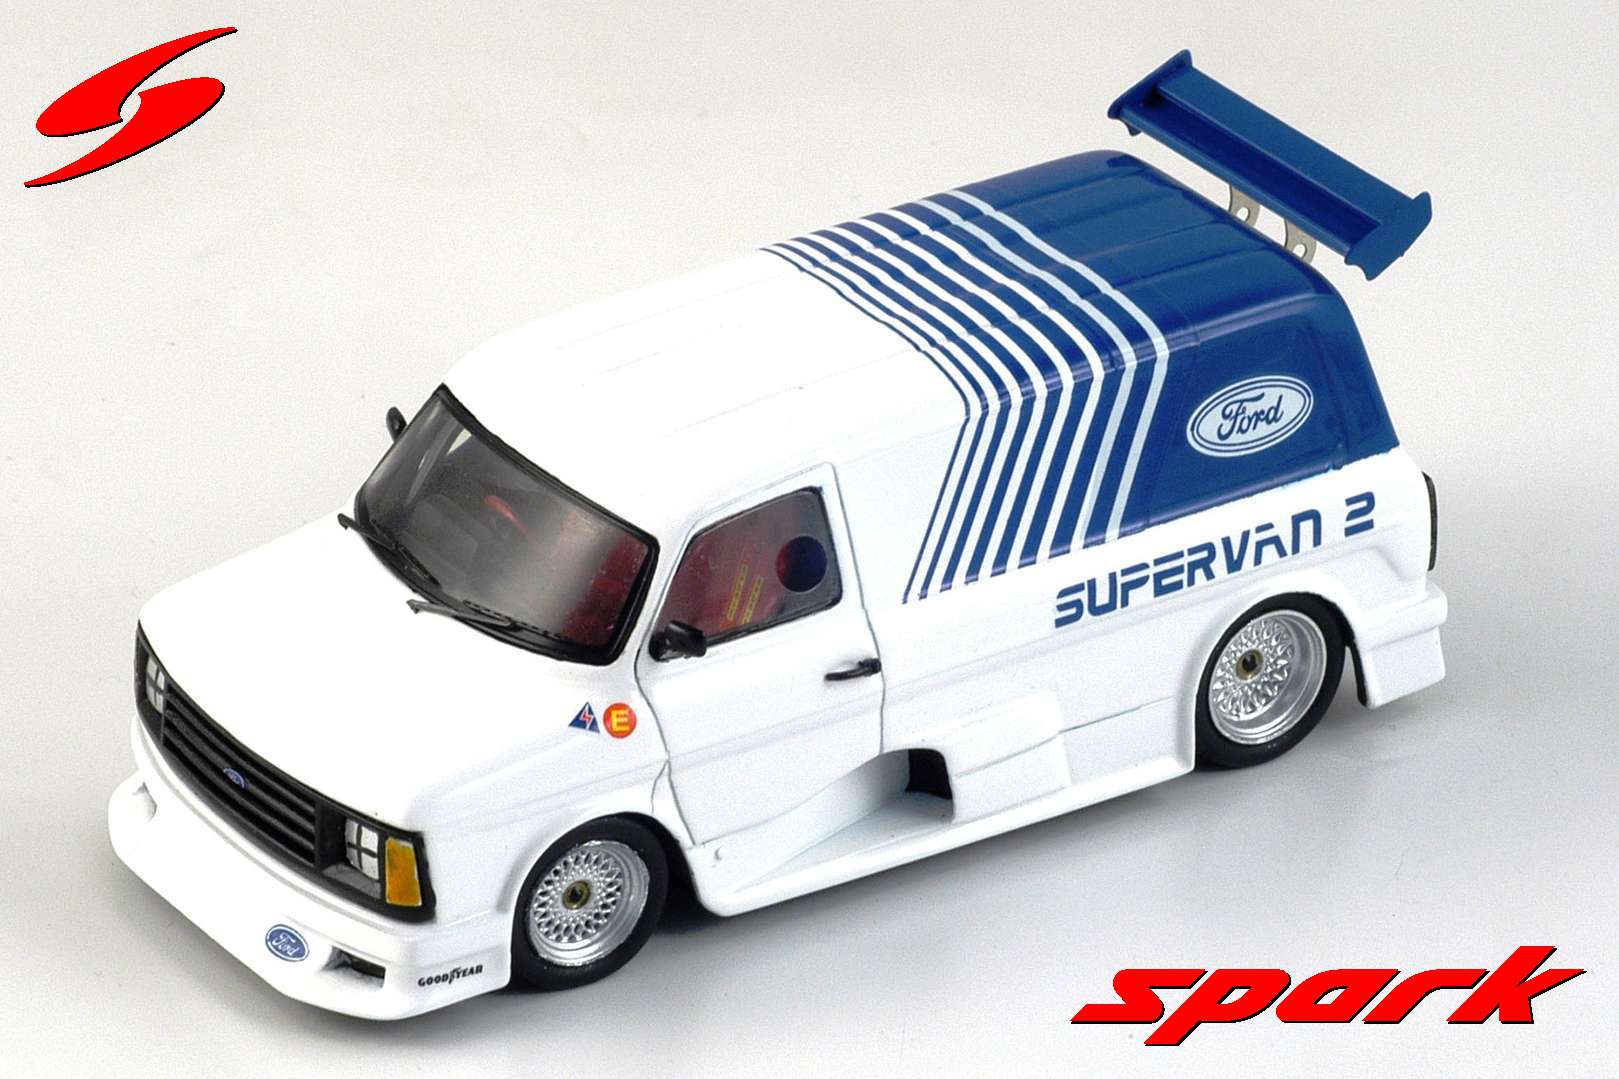 spark-S0282-Ford-Transit-Supervan-2-Cosworth-DFL-C100-Group-C-racing